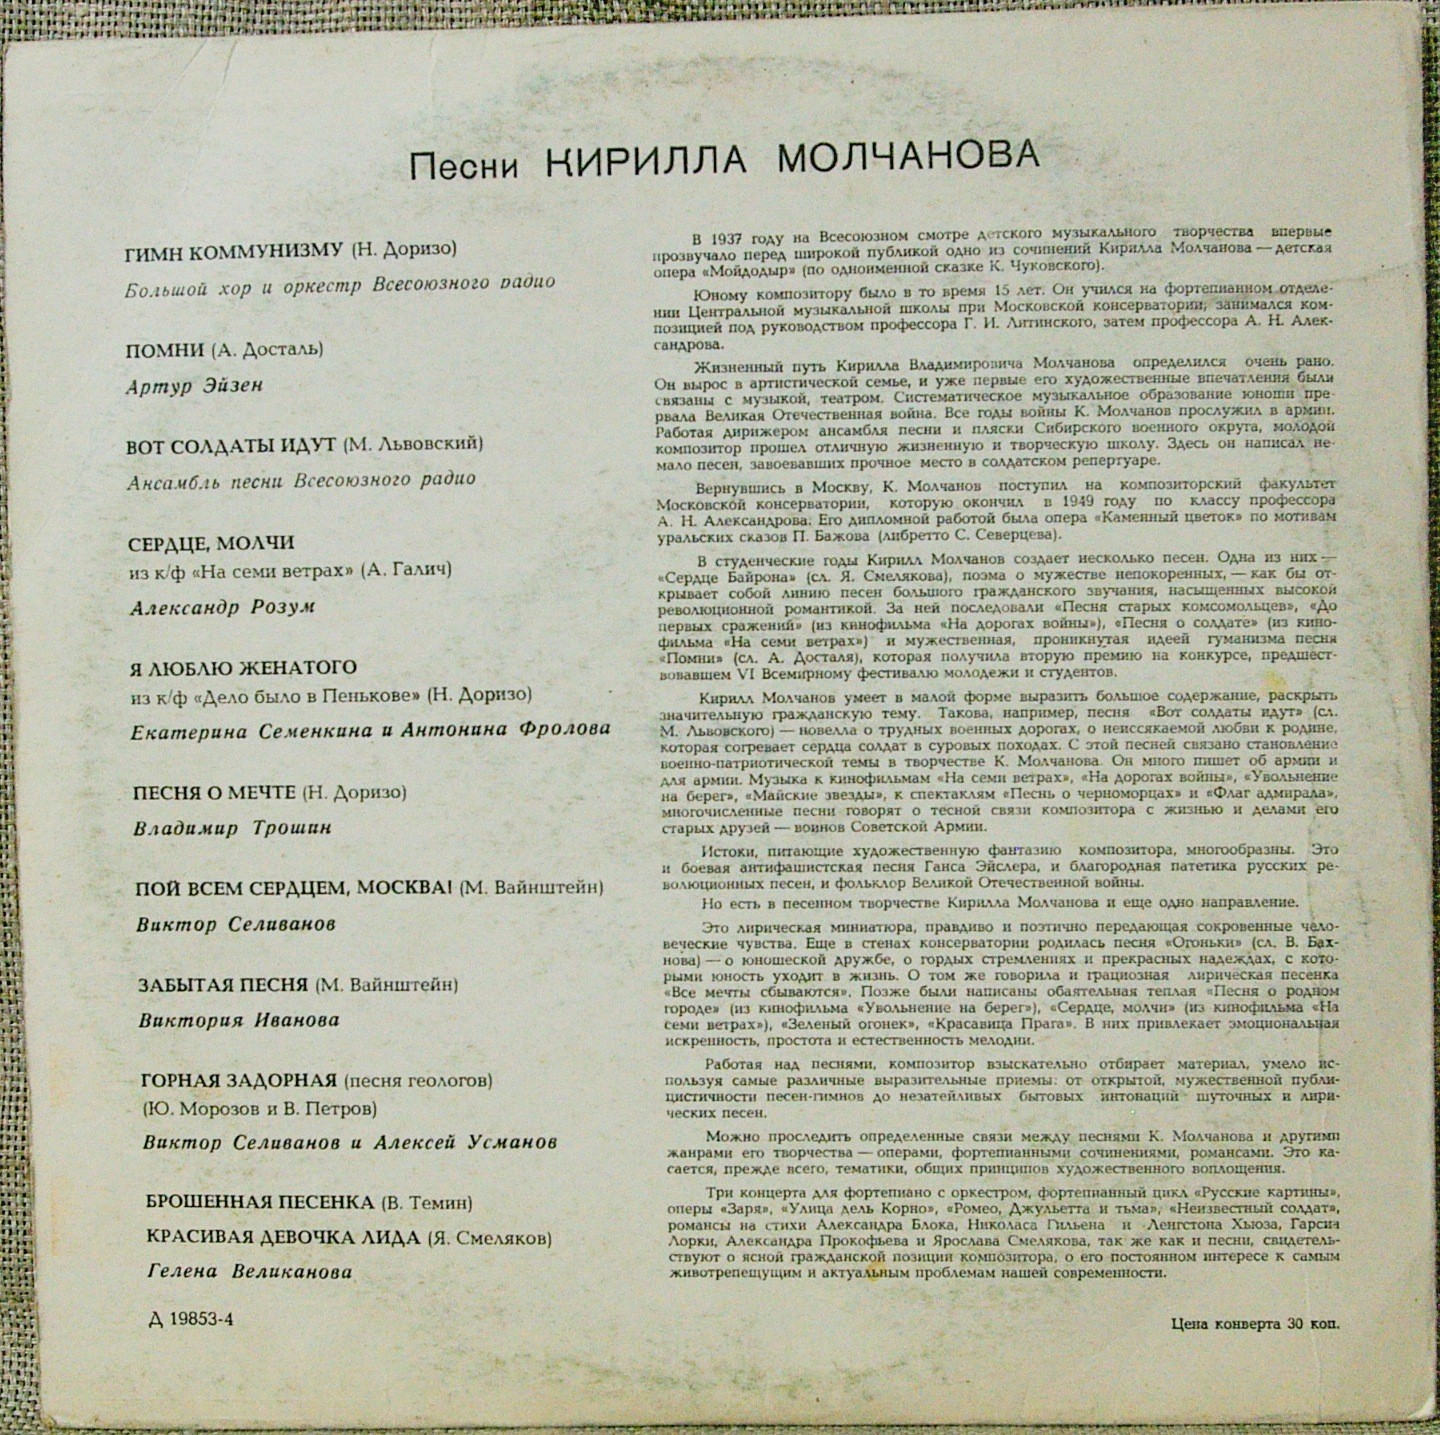 К. МОЛЧАНОВ (1922). Песни